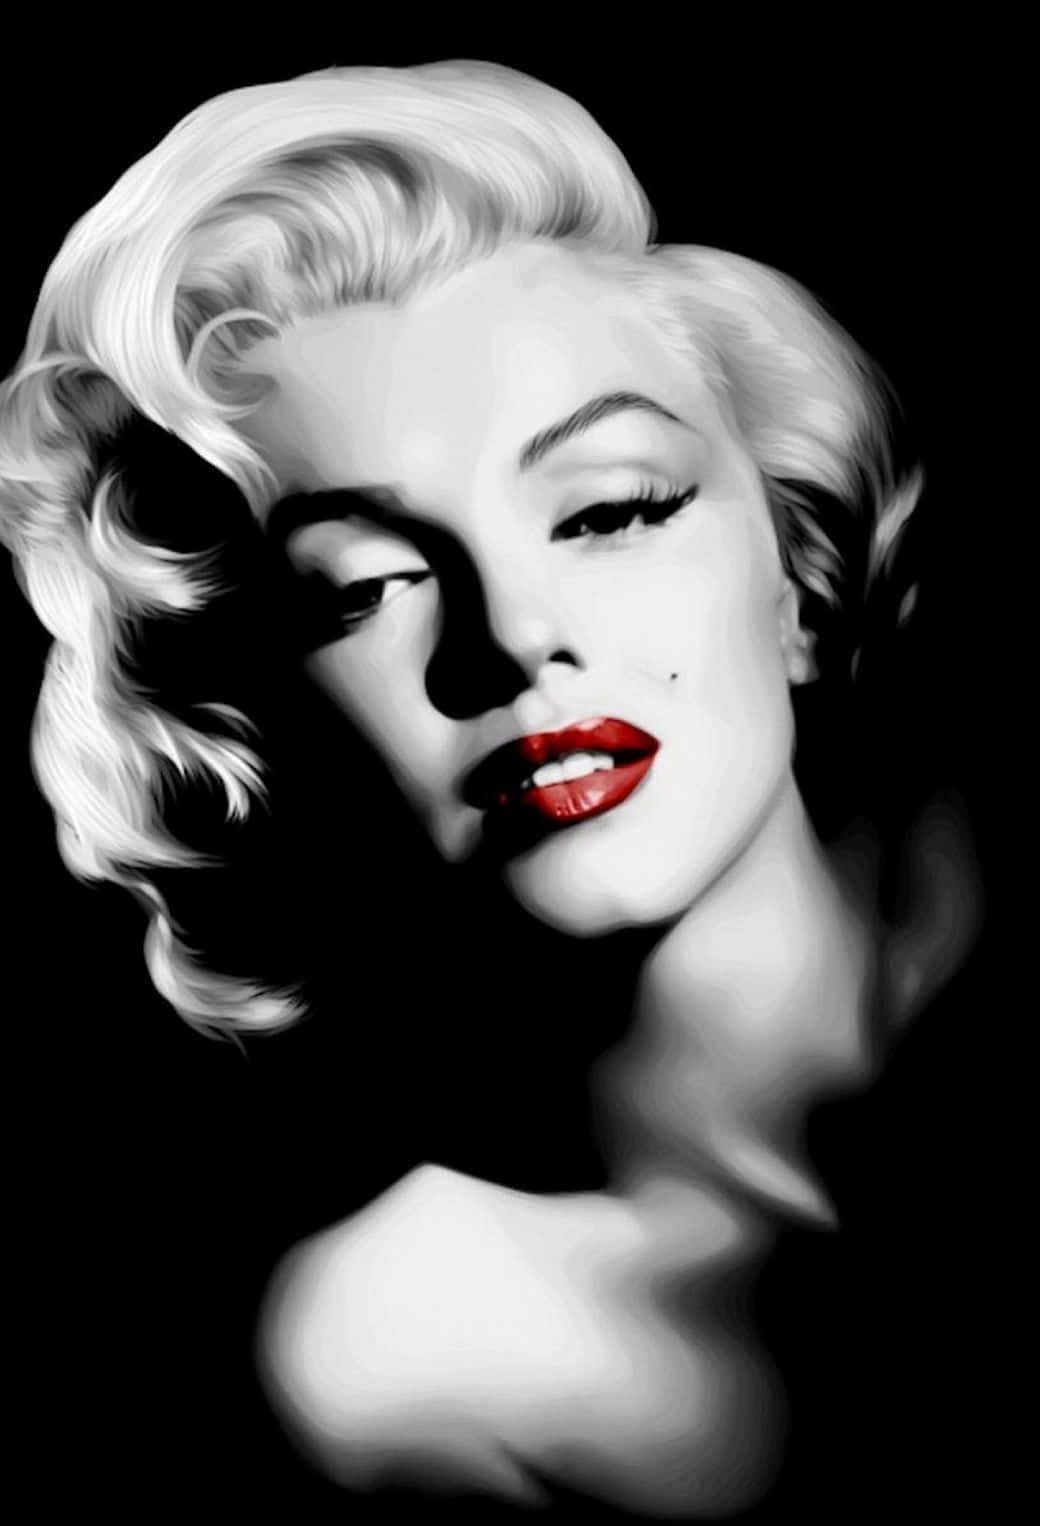 A Marilyn Monroe themed Iphone Wallpaper